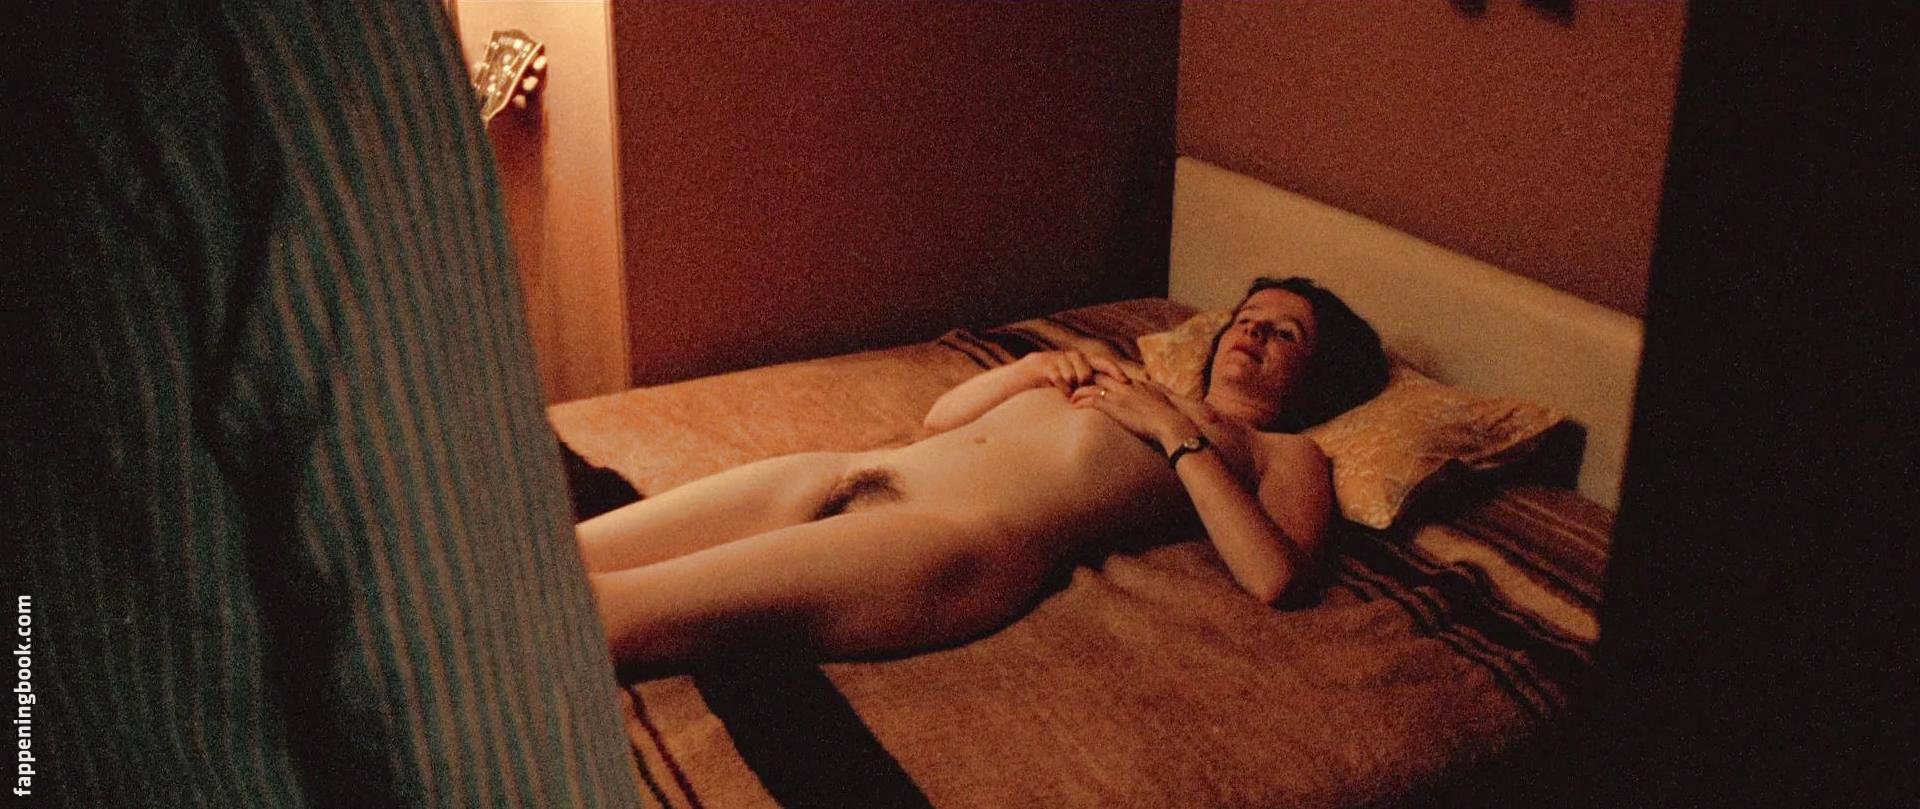 Emily Watson Nude Pic.